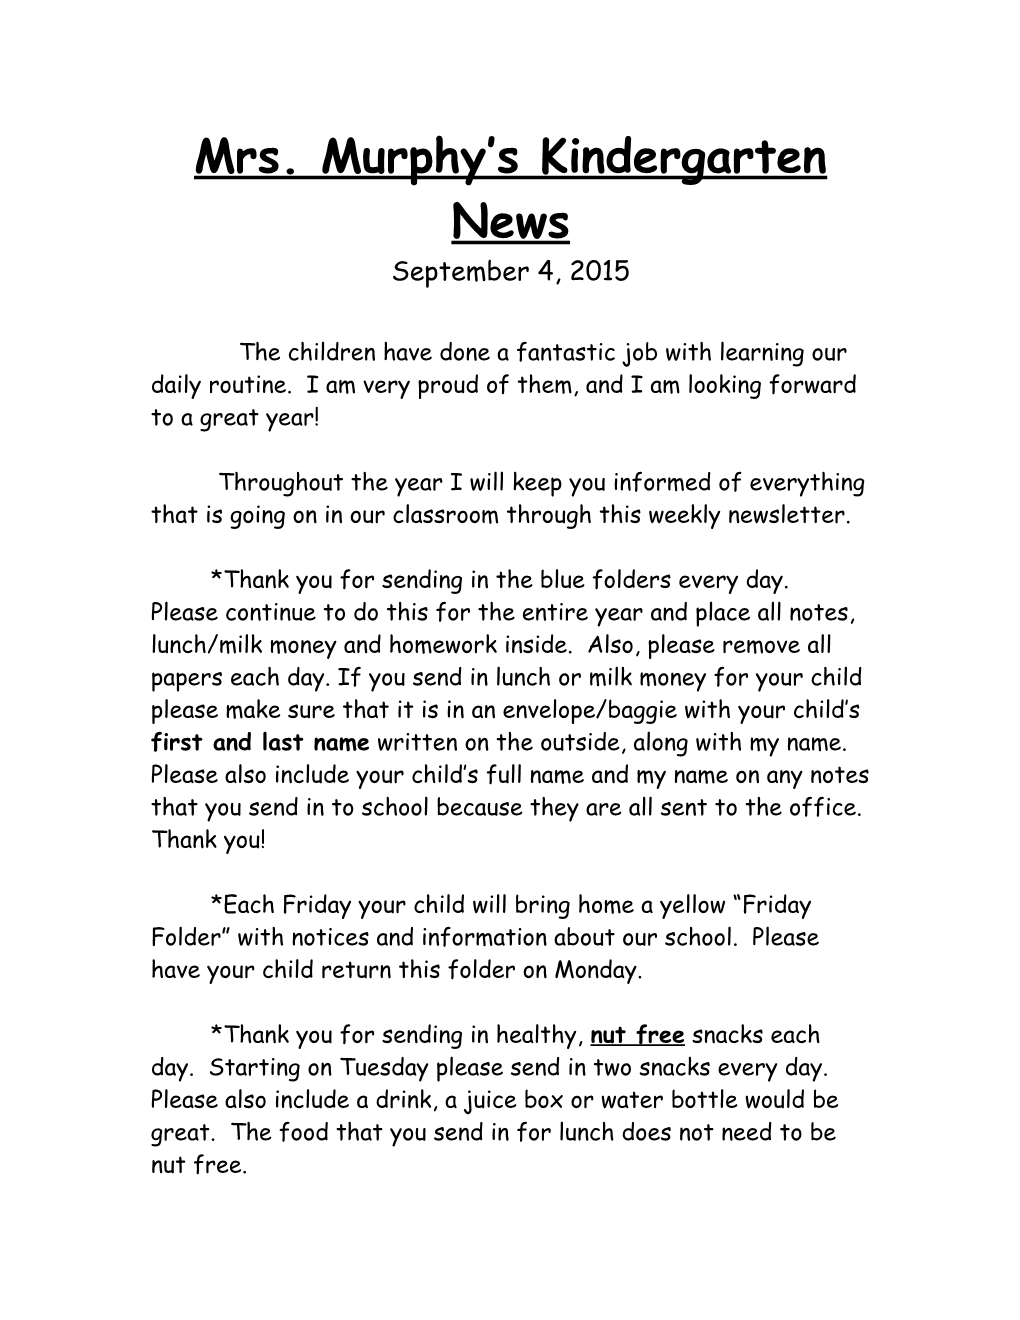 Mrs. Murphy S Kindergarten News